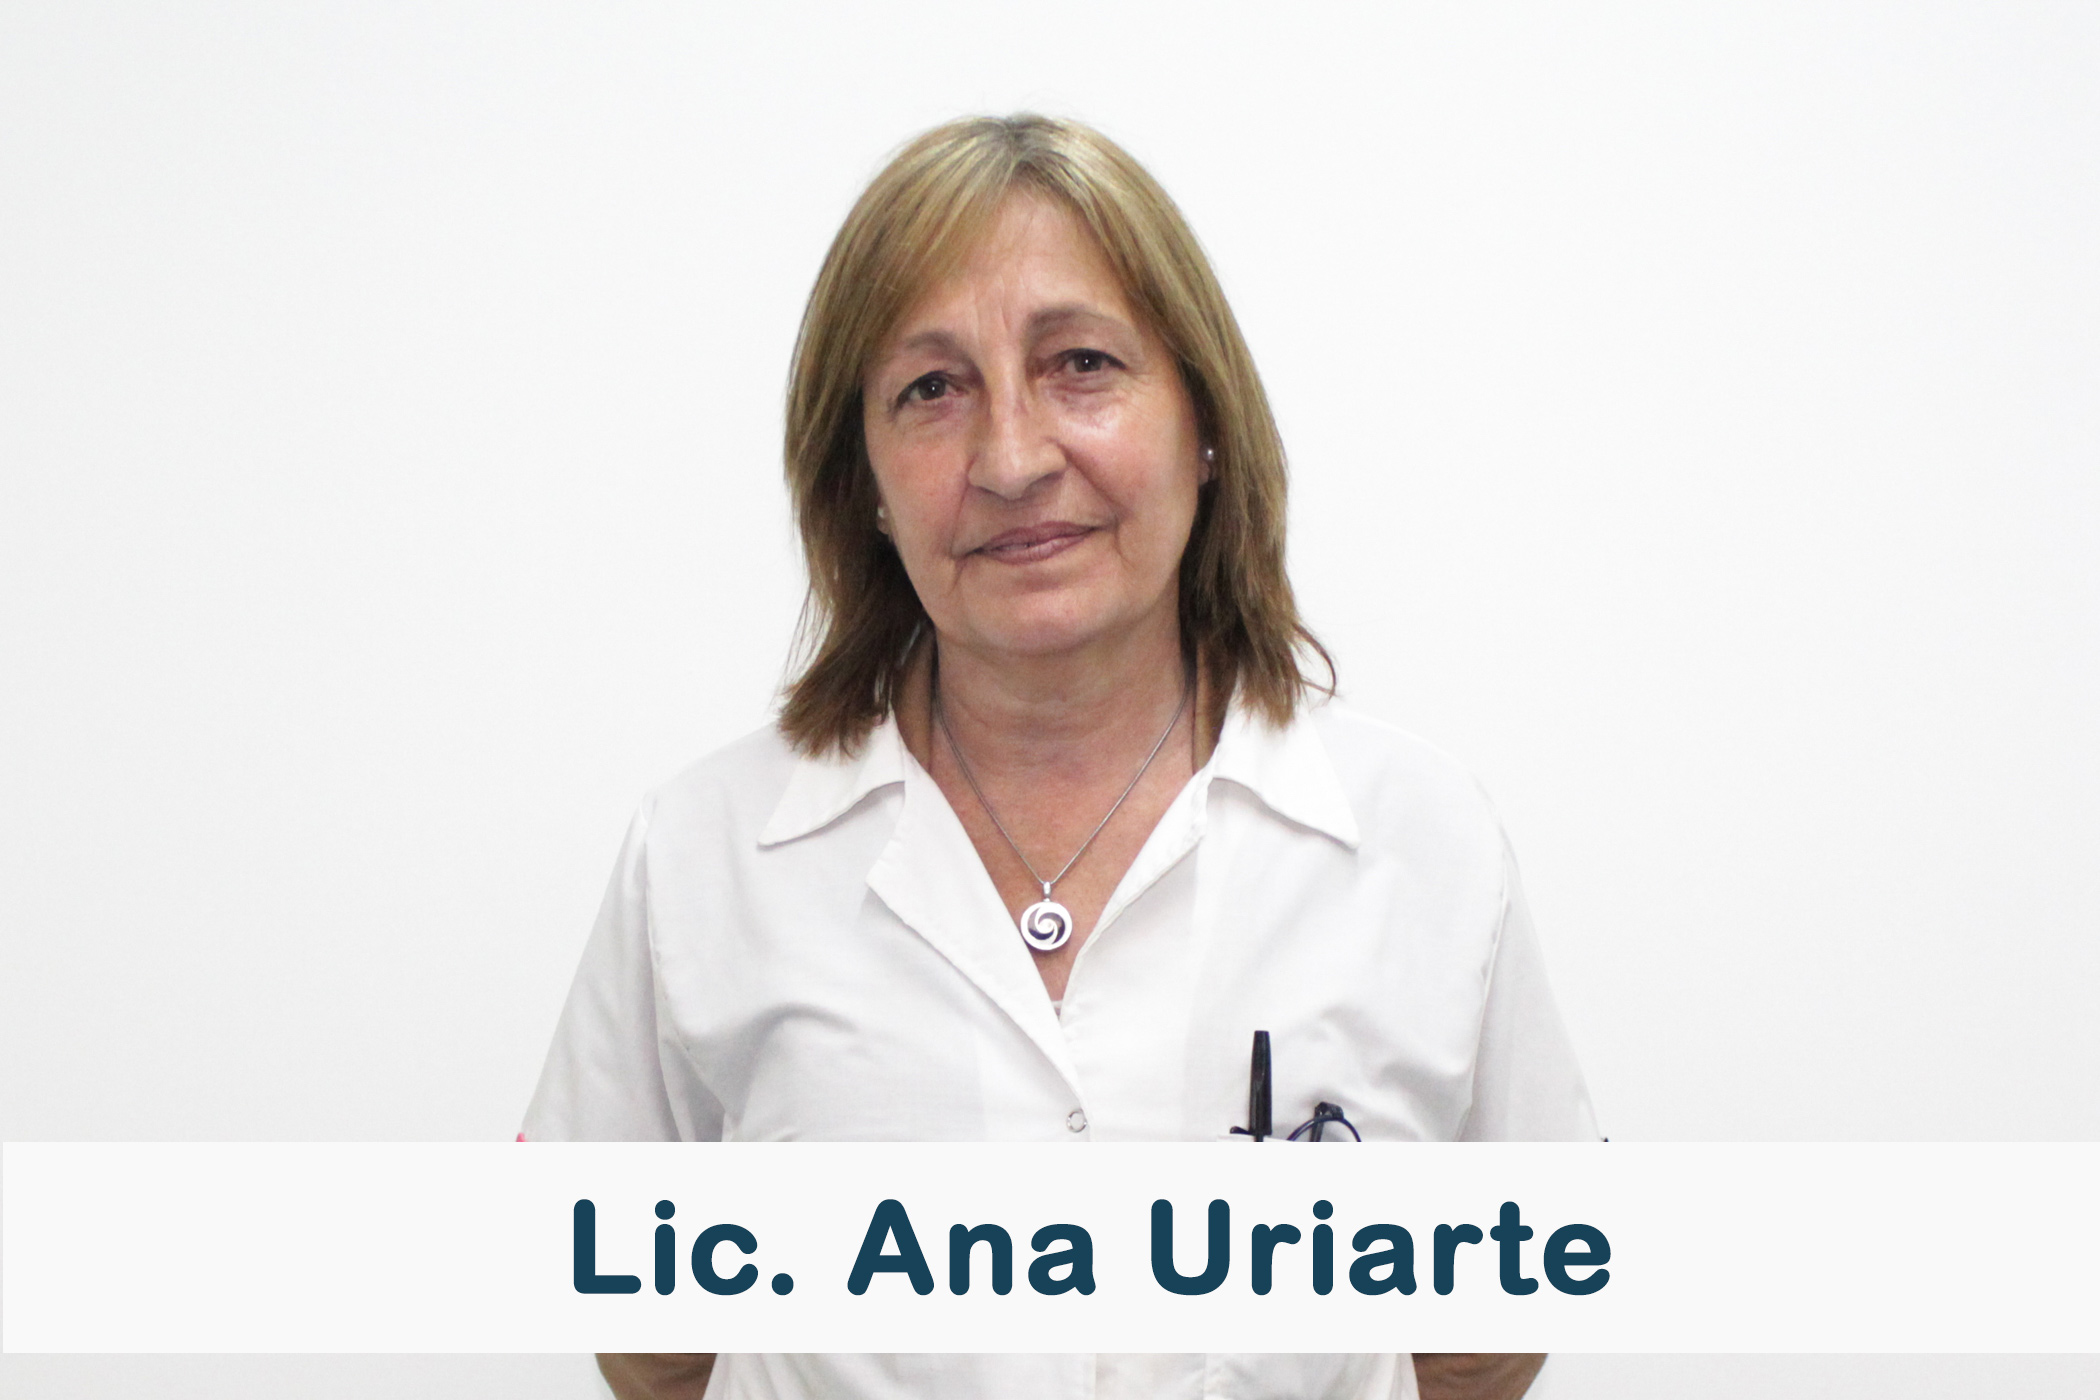 Lic. Ana Uriarte